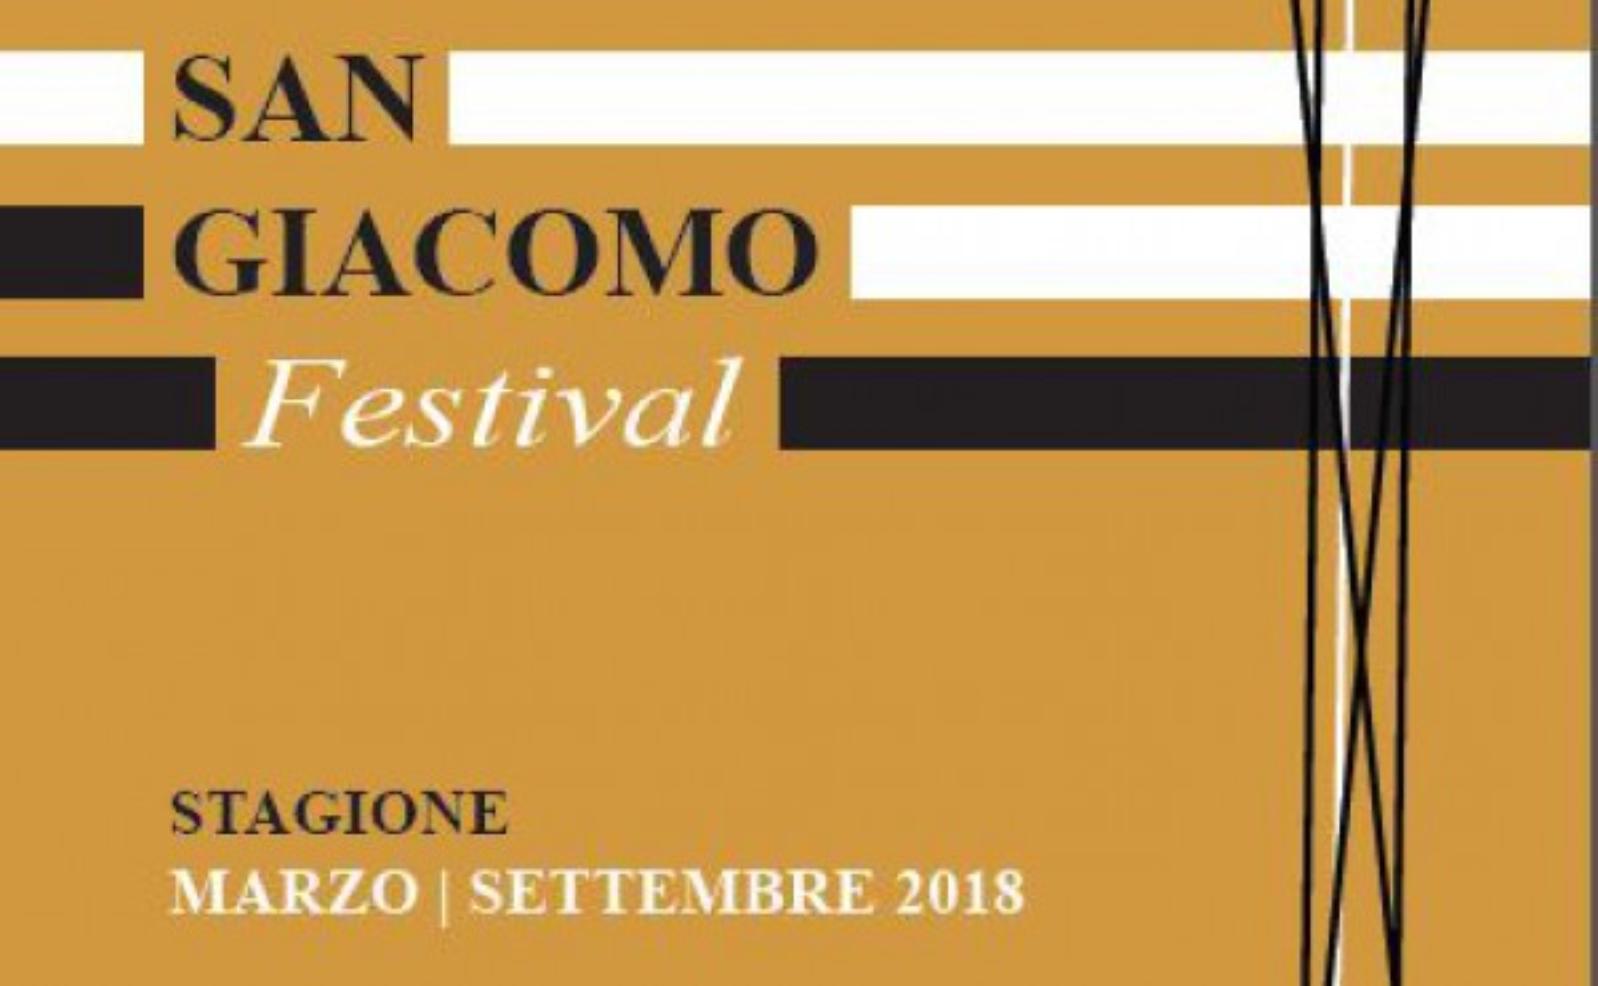 San Giacomo Festival - June 2018